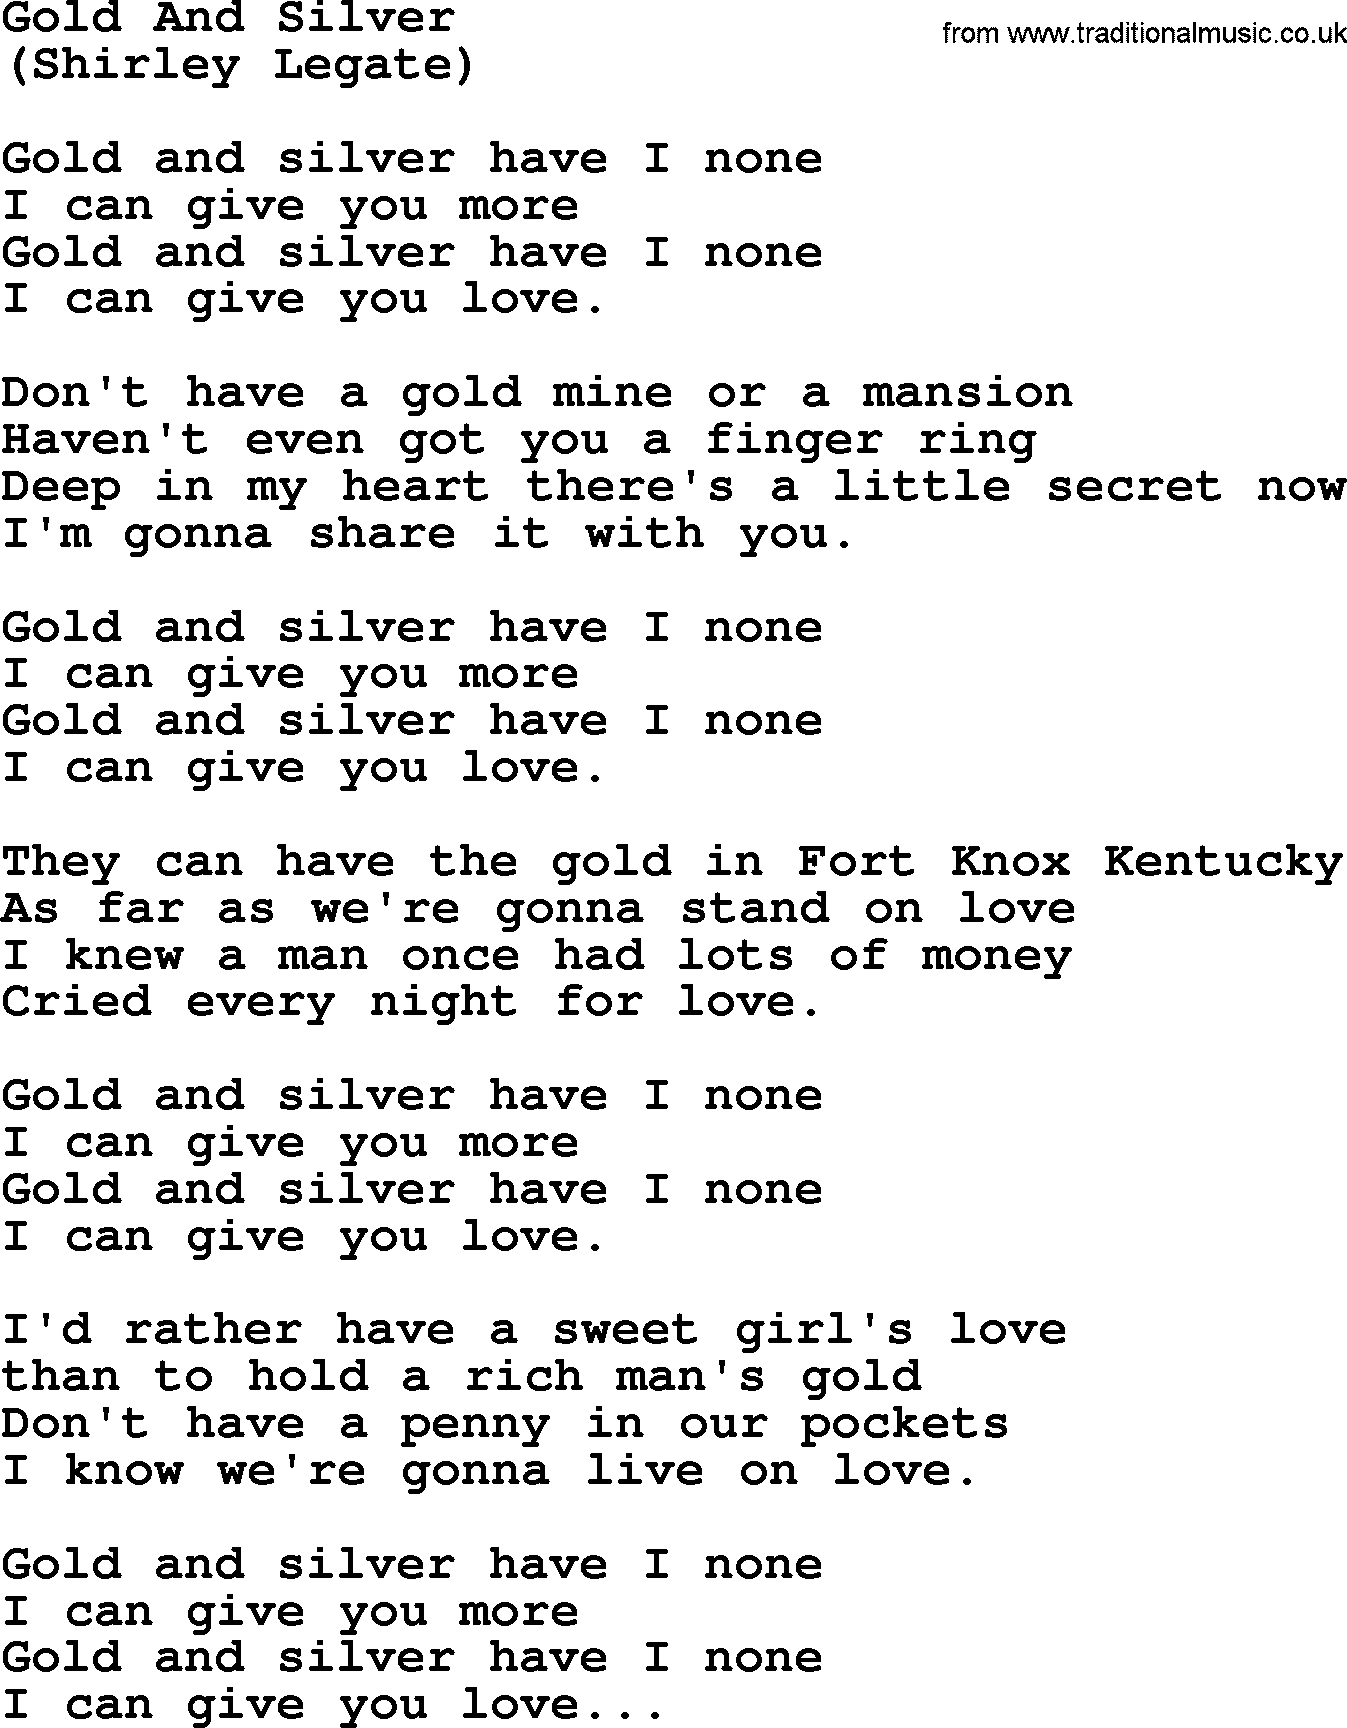 George Jones song: Gold And Silver, lyrics